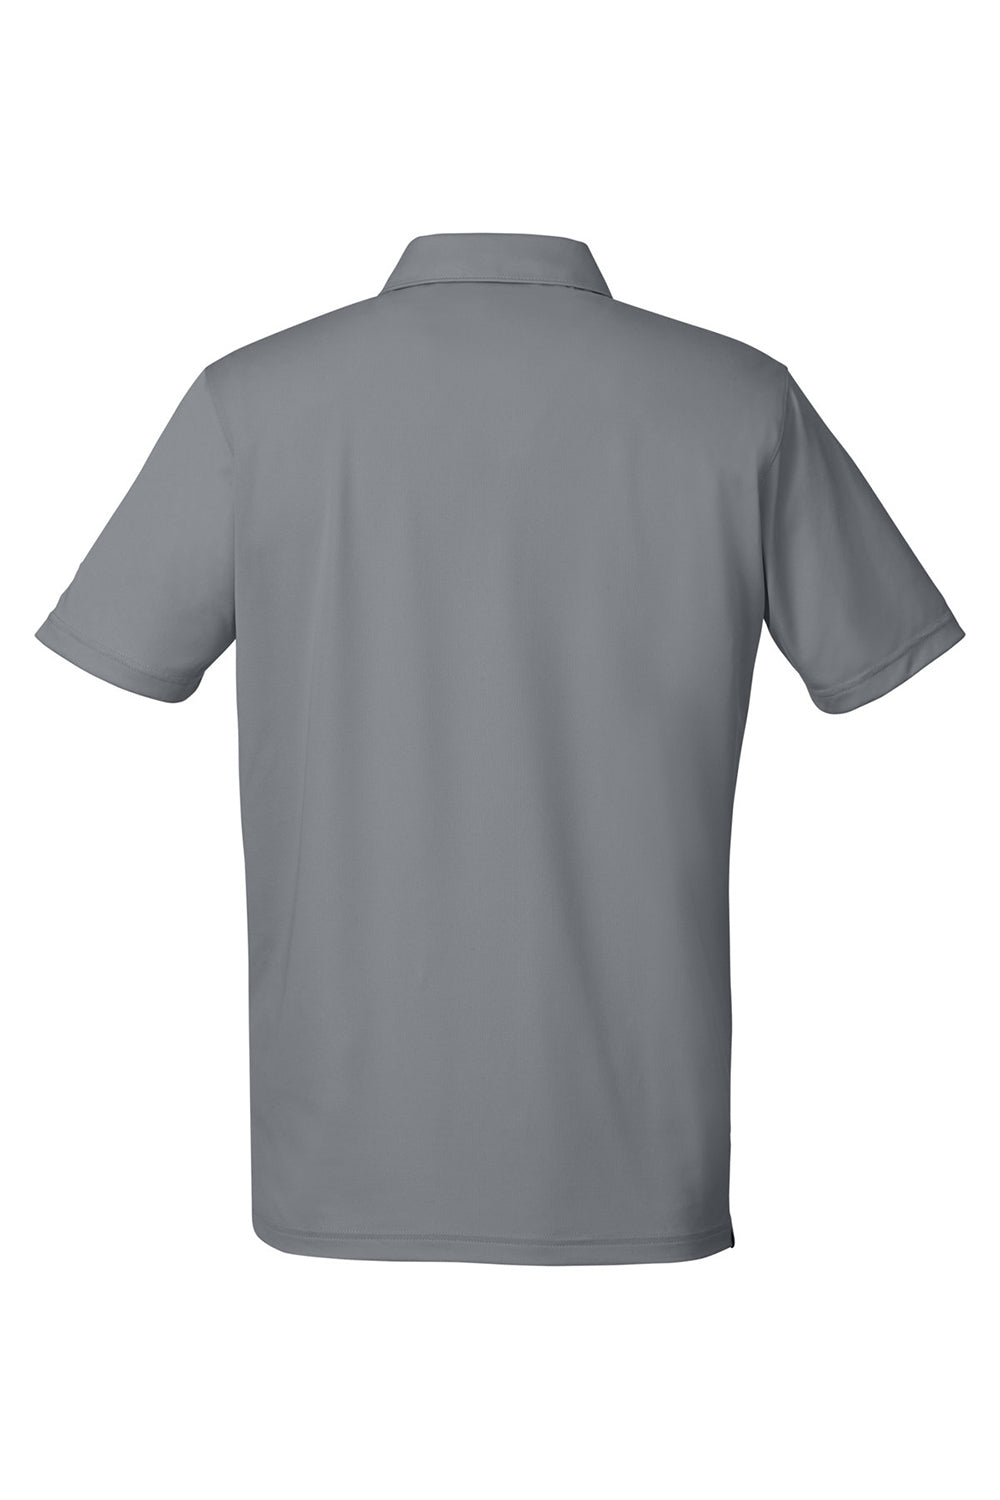 Puma 599120 Mens Gamer Short Sleeve Polo Shirt Quiet Shade Grey Flat Back